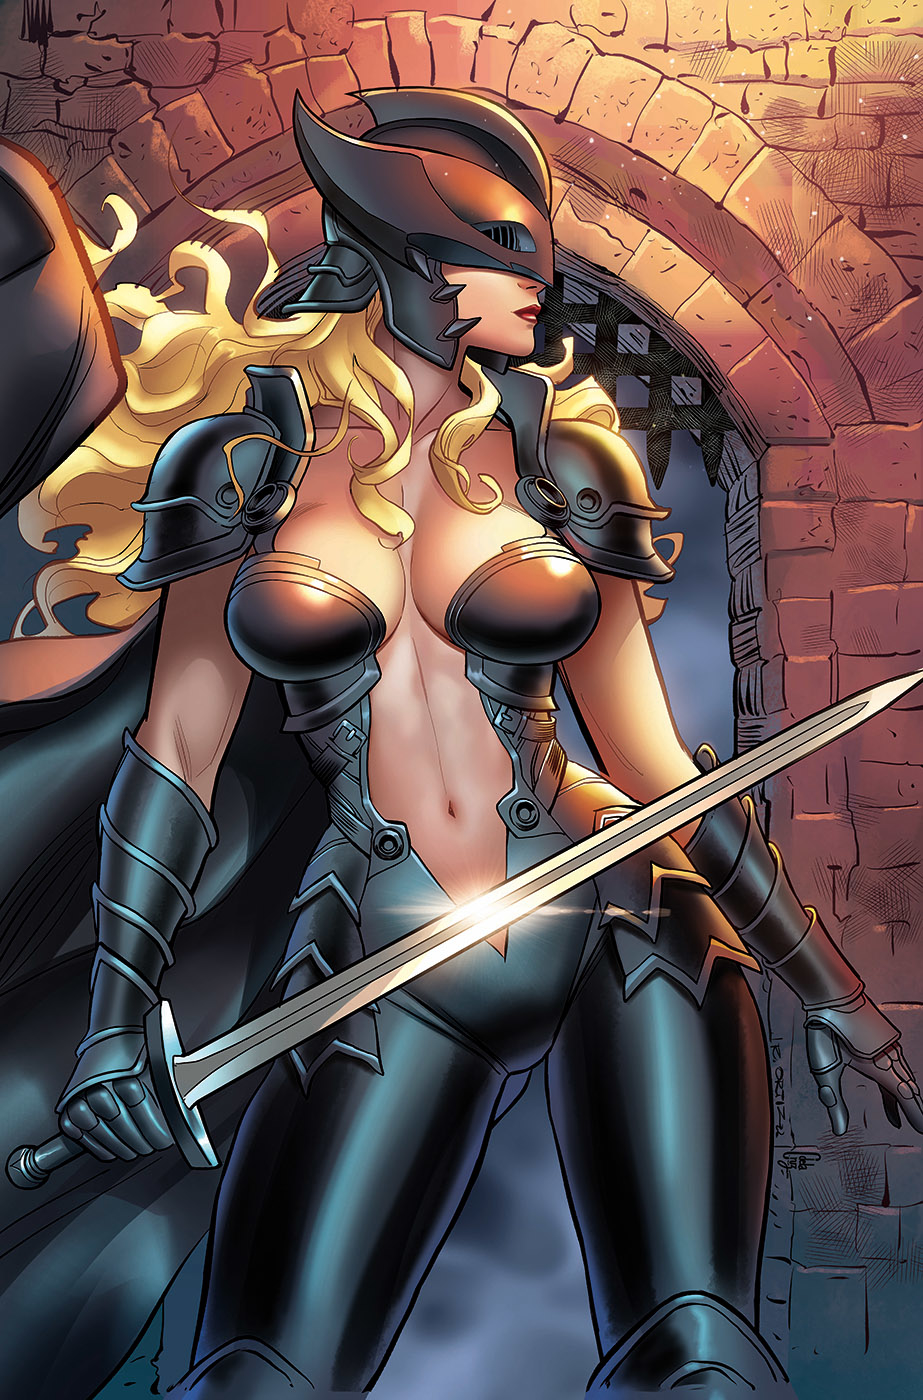 Myths & Legends Black Knight Fate of Legends Cover C Ortiz